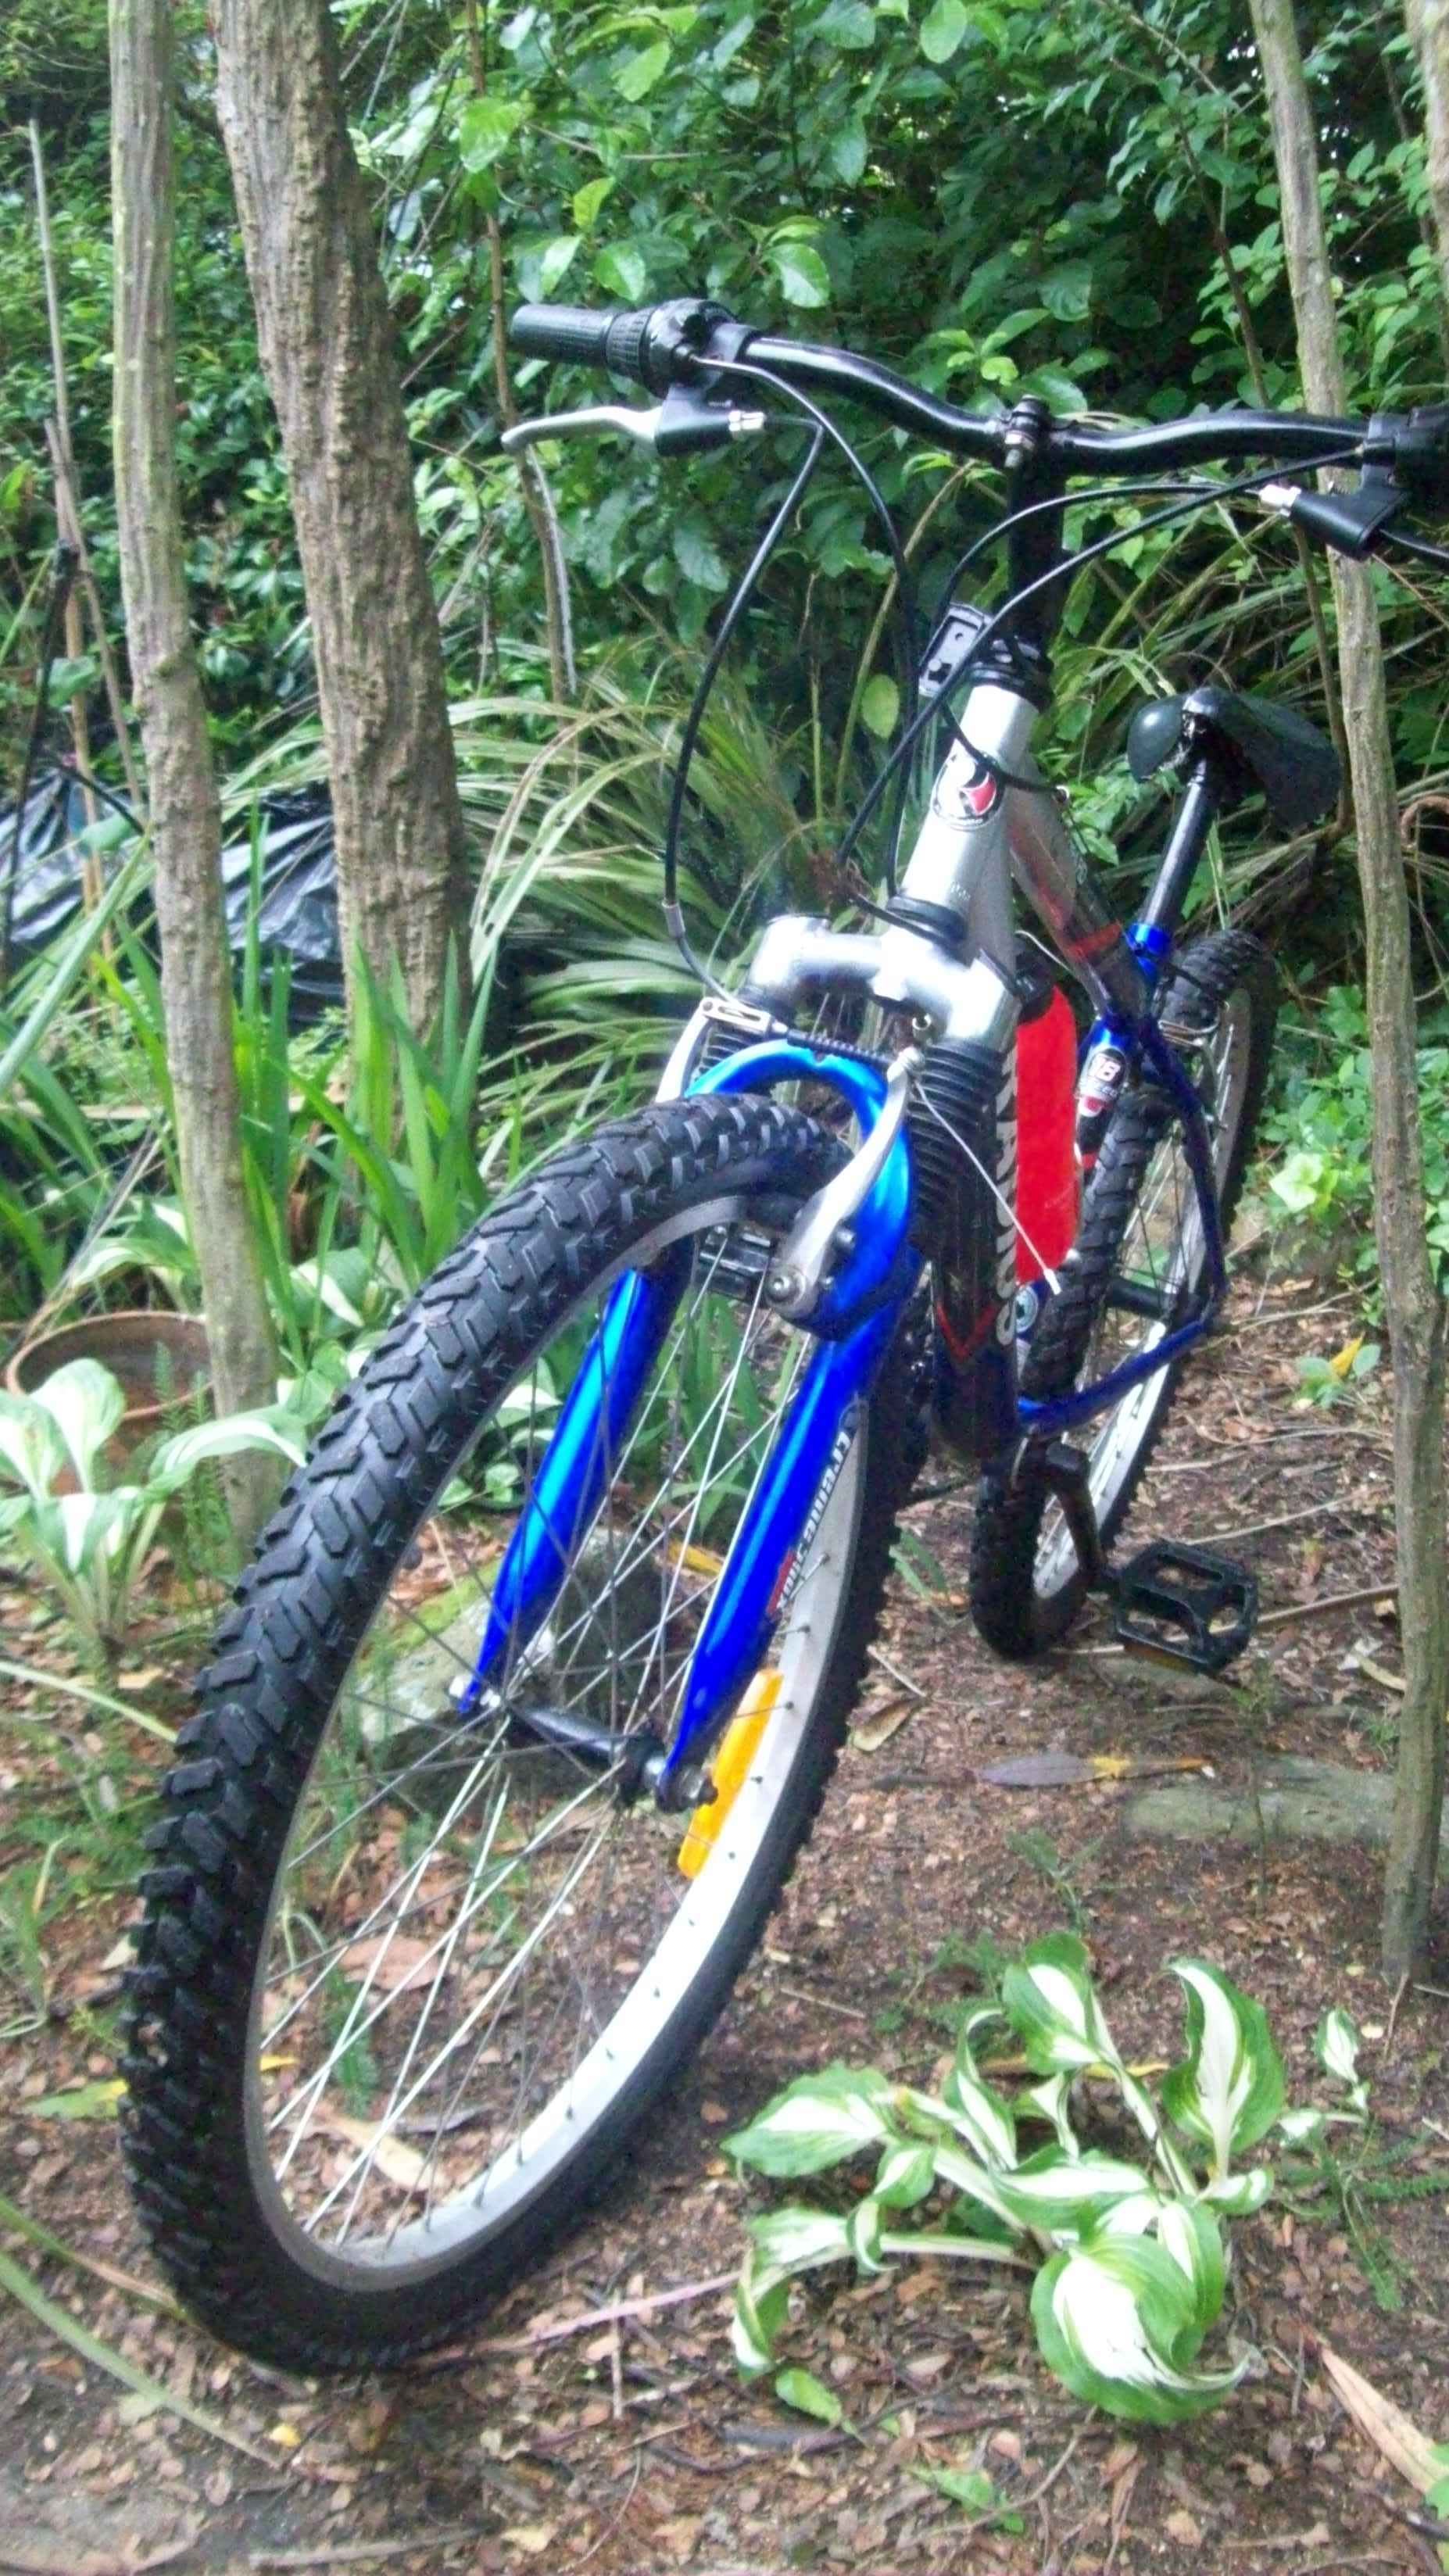 Radius bike at Roberts Park, Association, Mouth, Tyre, Transport, HQ Photo